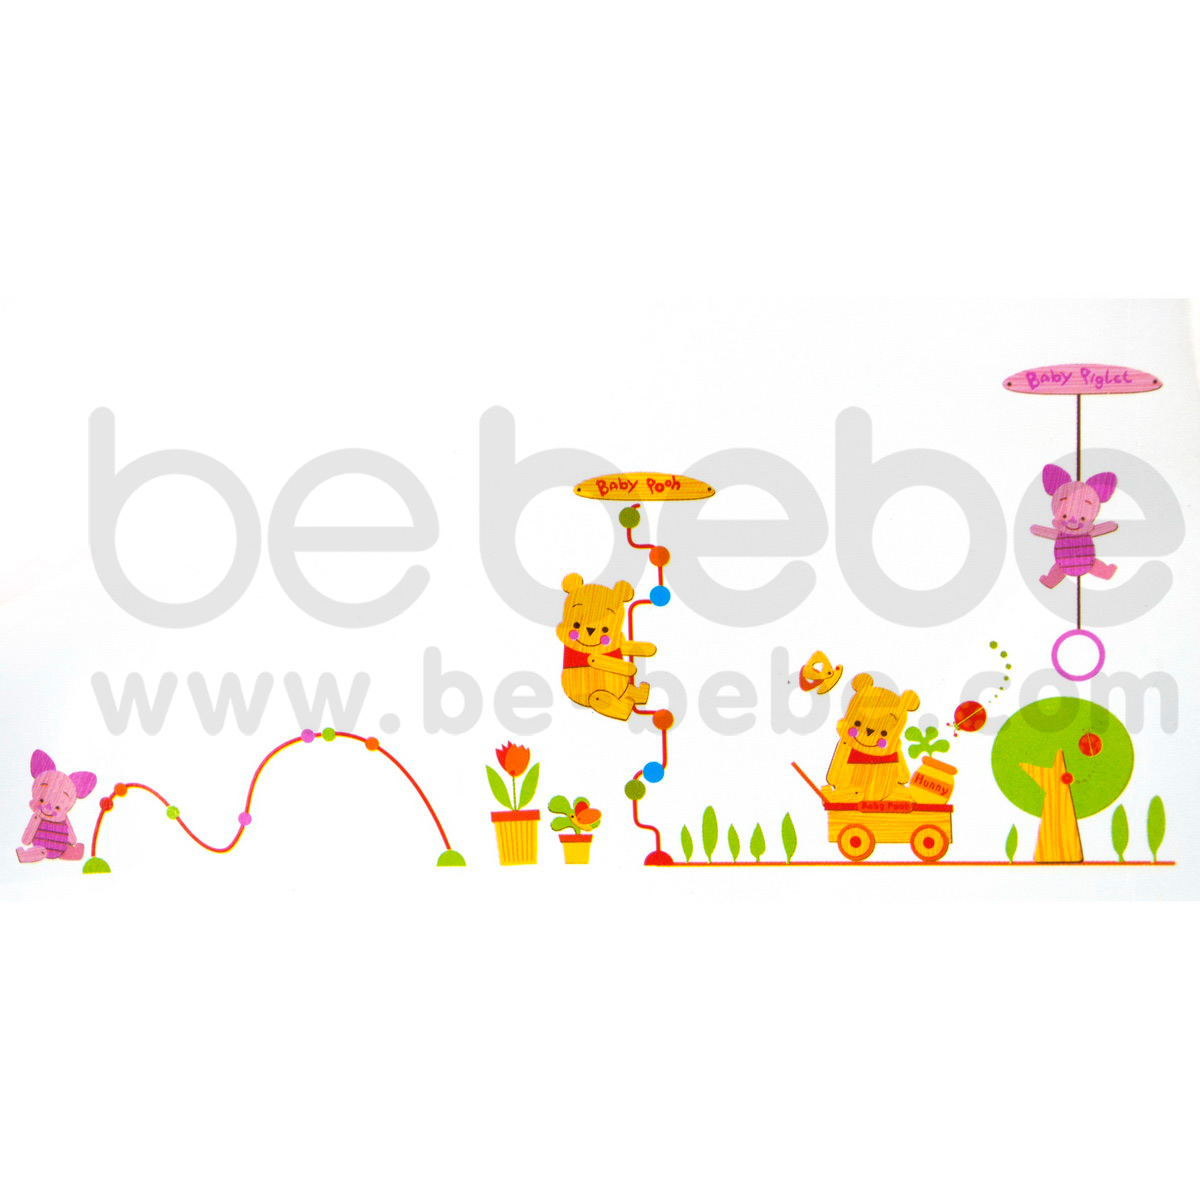 be bebe : Wall Sticker (50x70cm.) / HL-5840